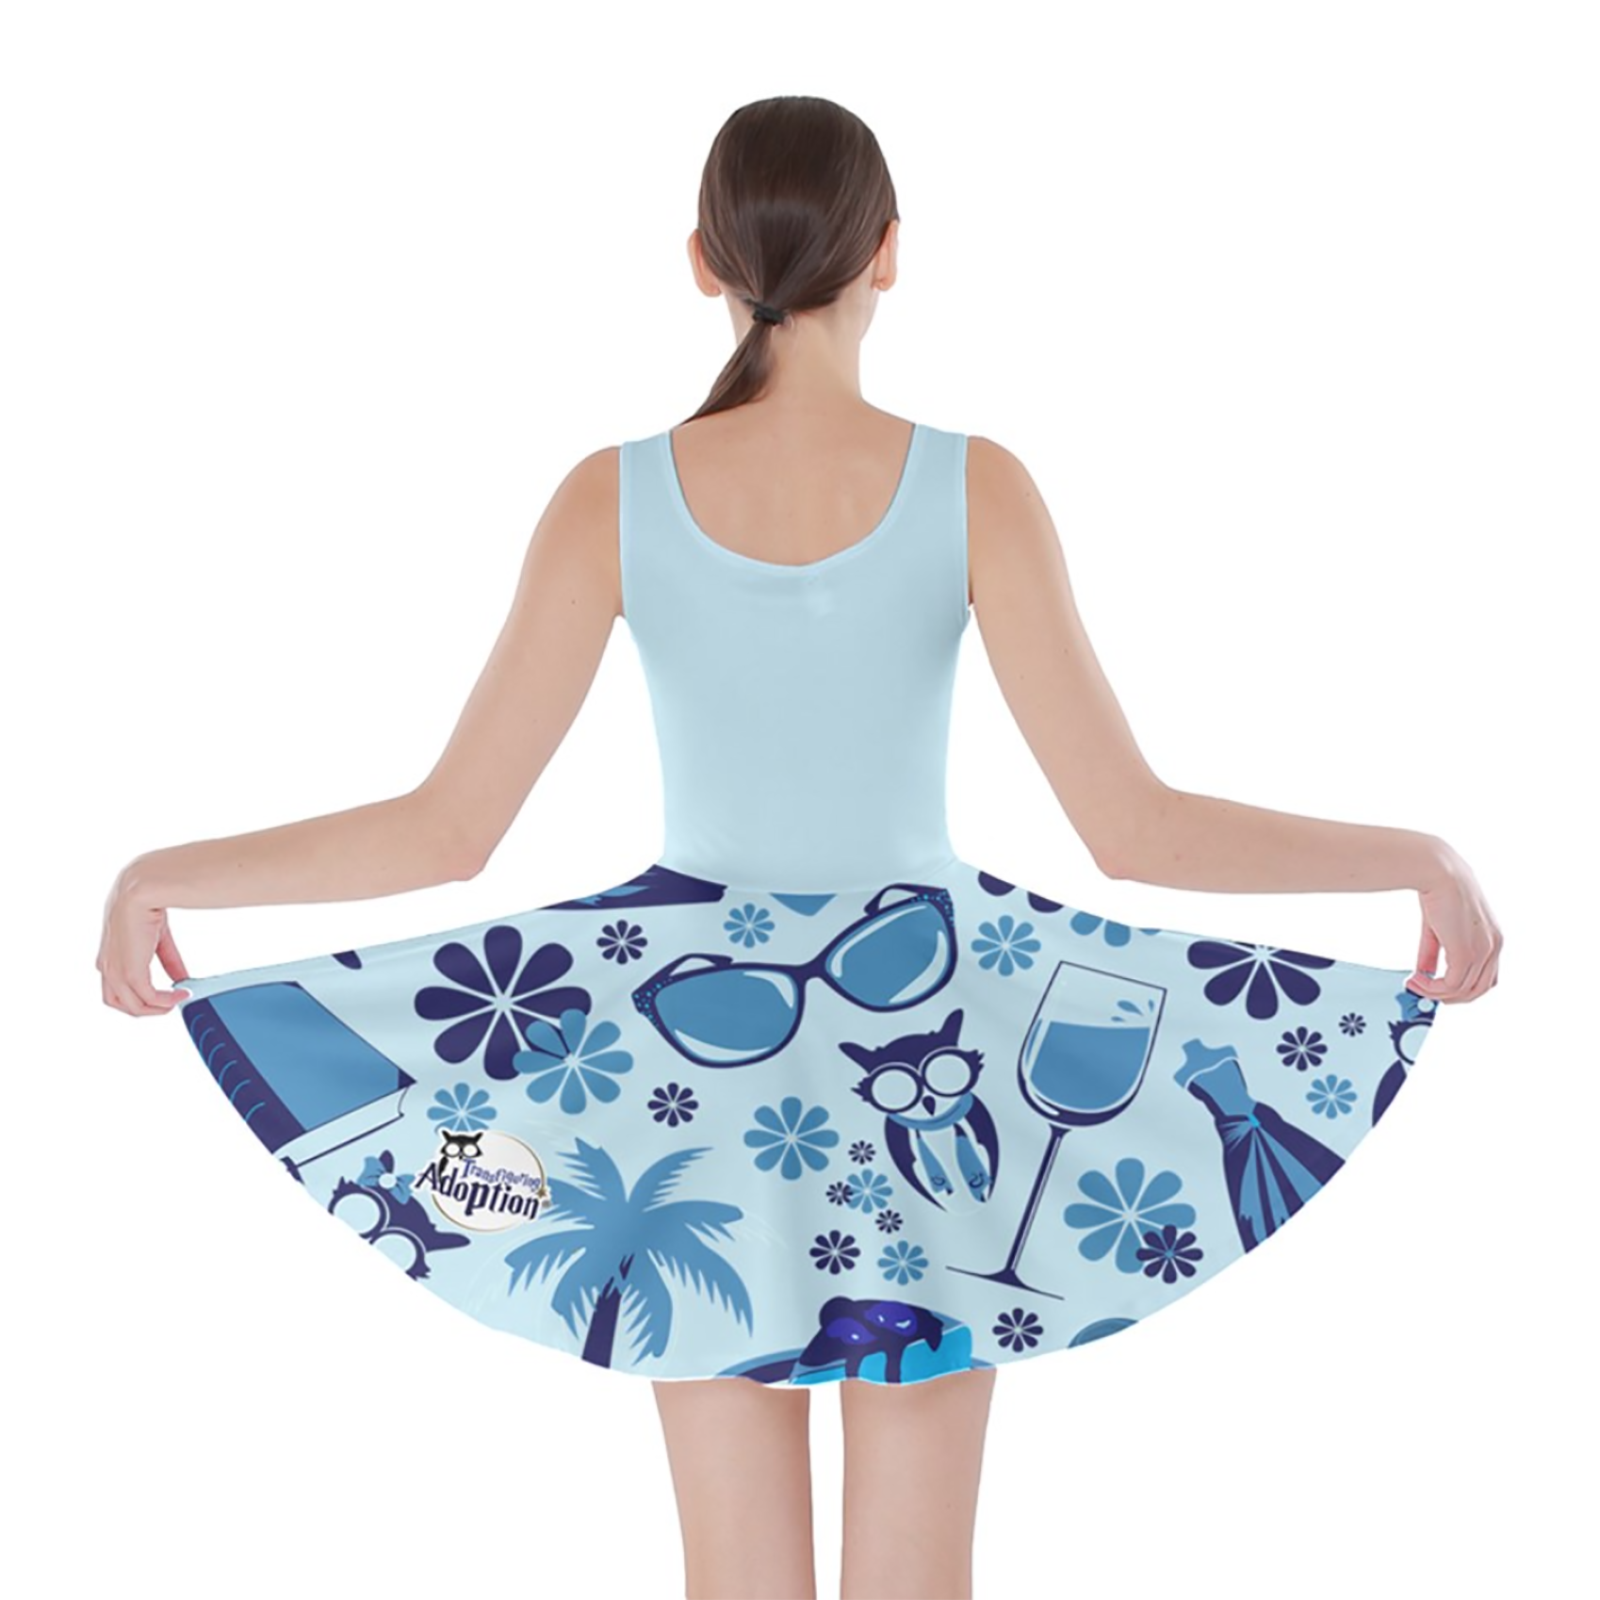 Self-Care Pattern Skater Dress (Blue)